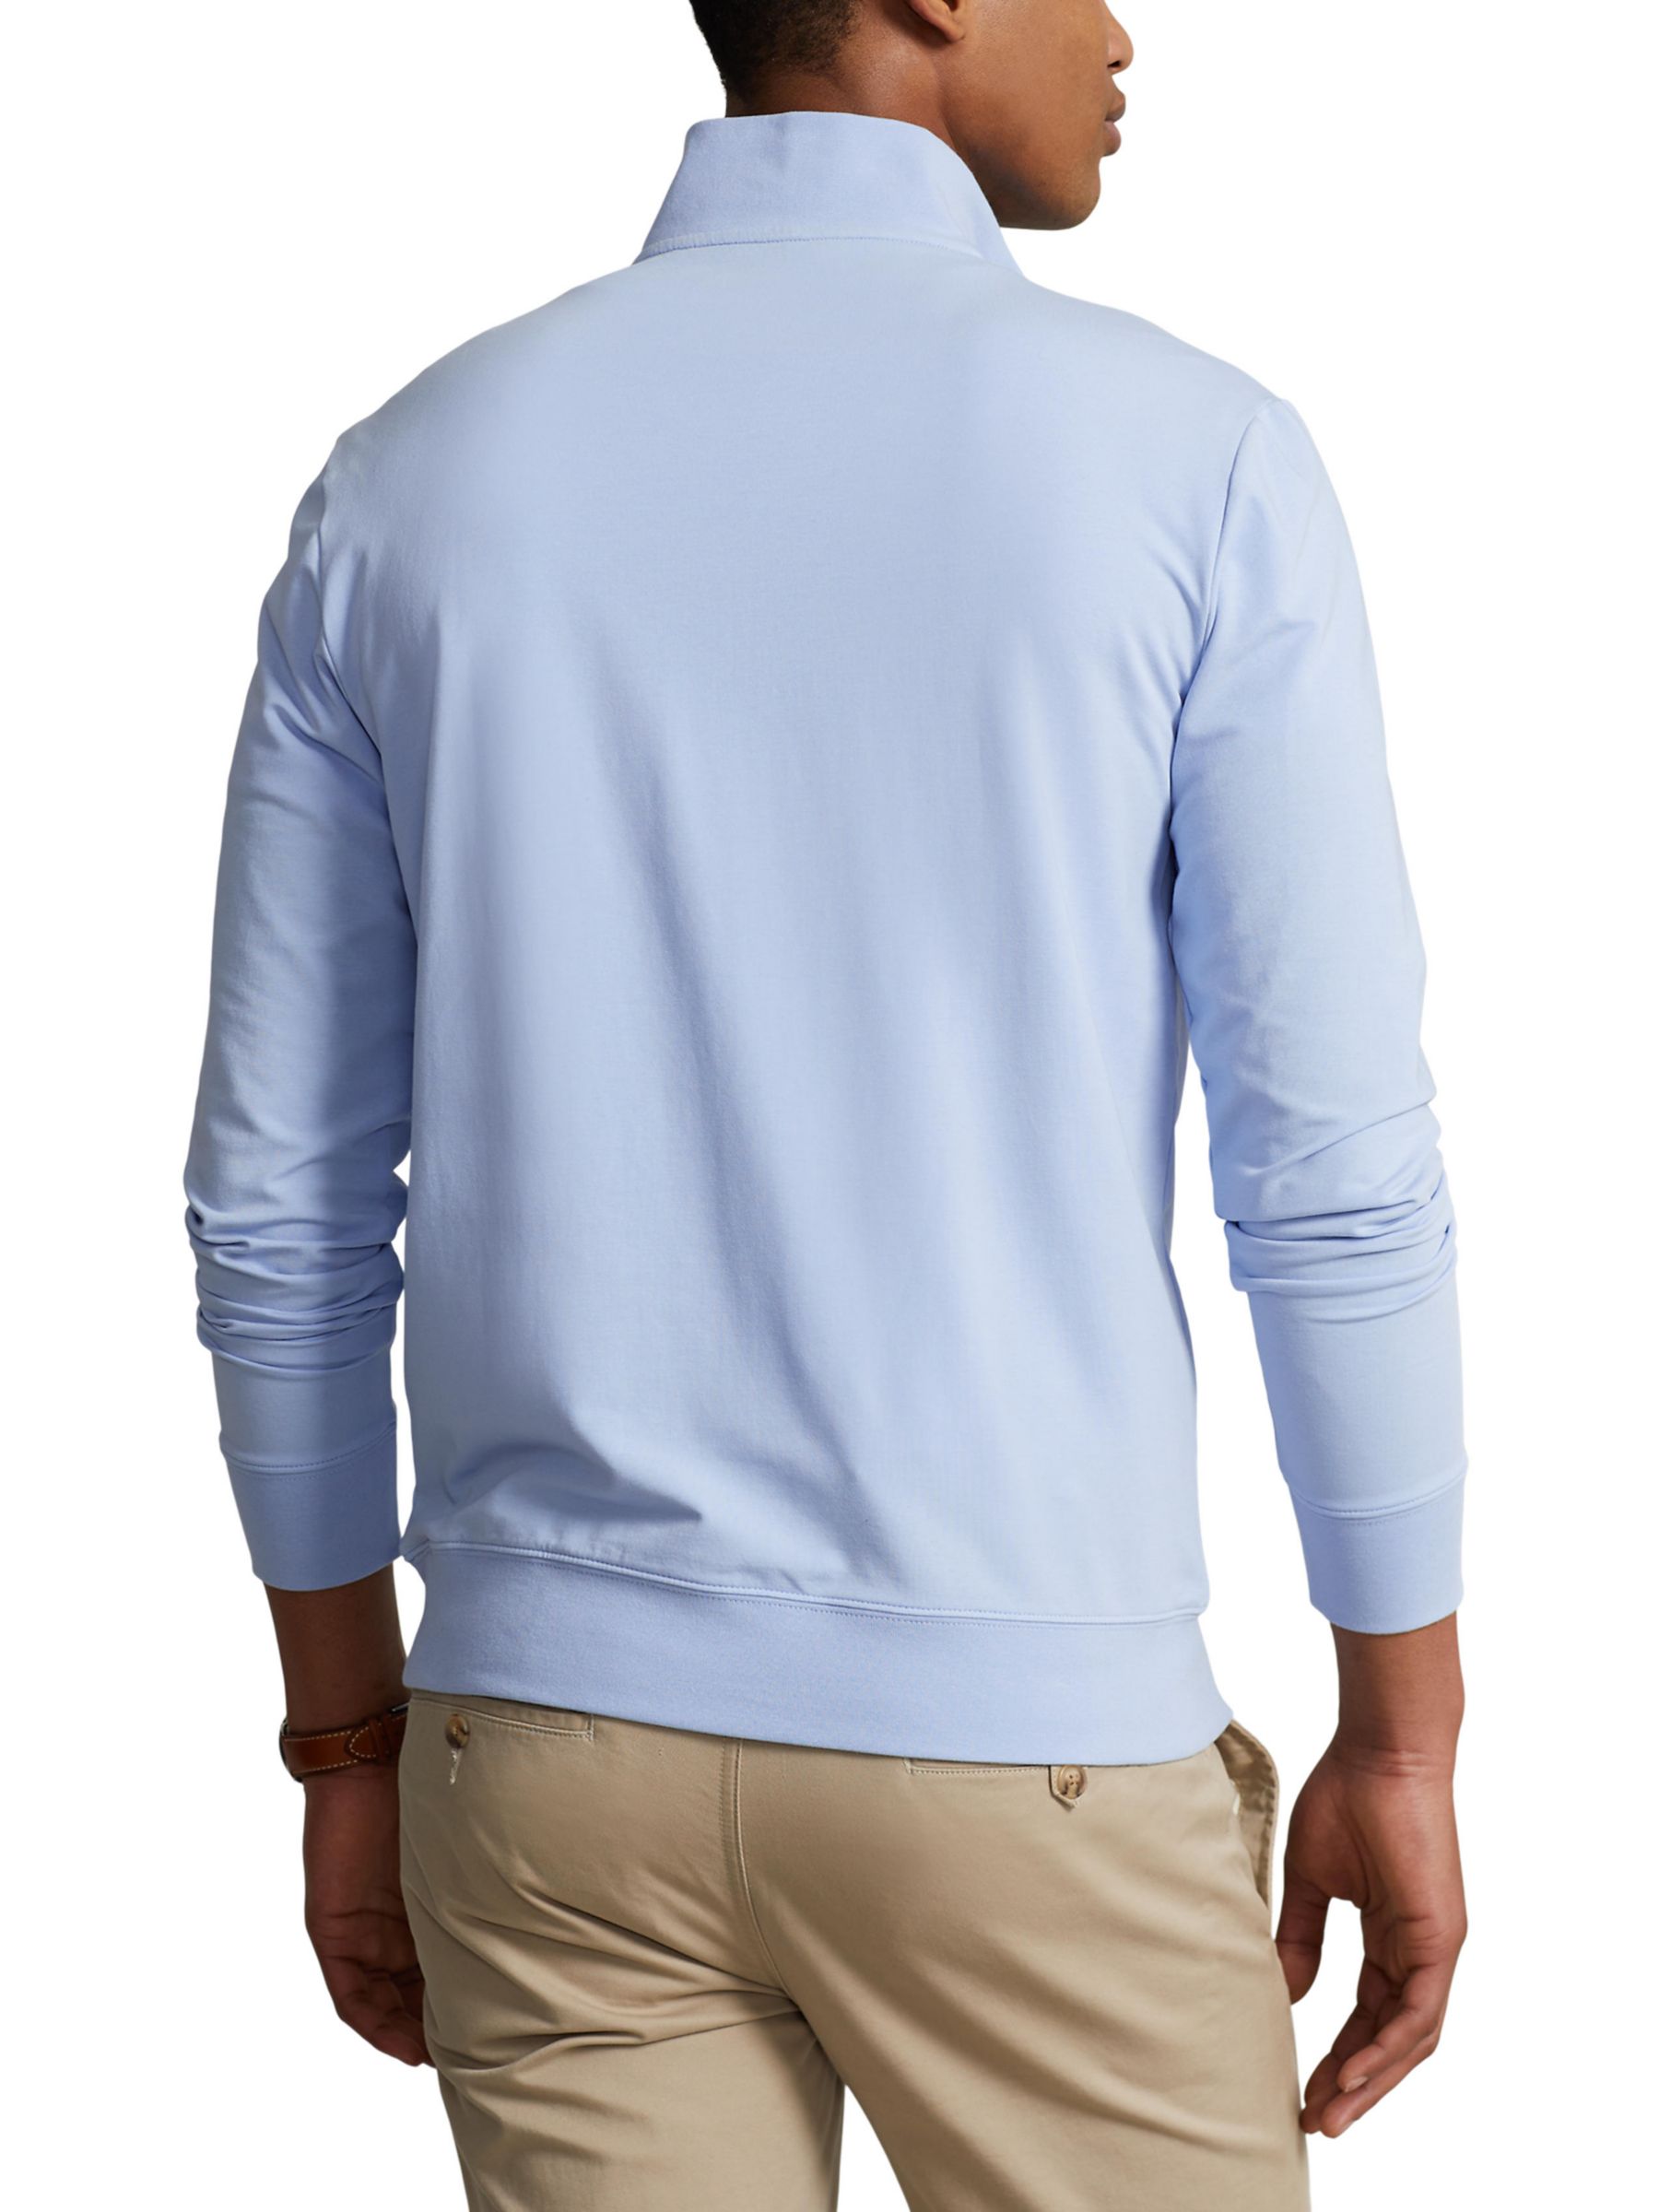 Polo Ralph Lauren Long Sleeve Zip Golf Jersey Top, Elite Blue, L